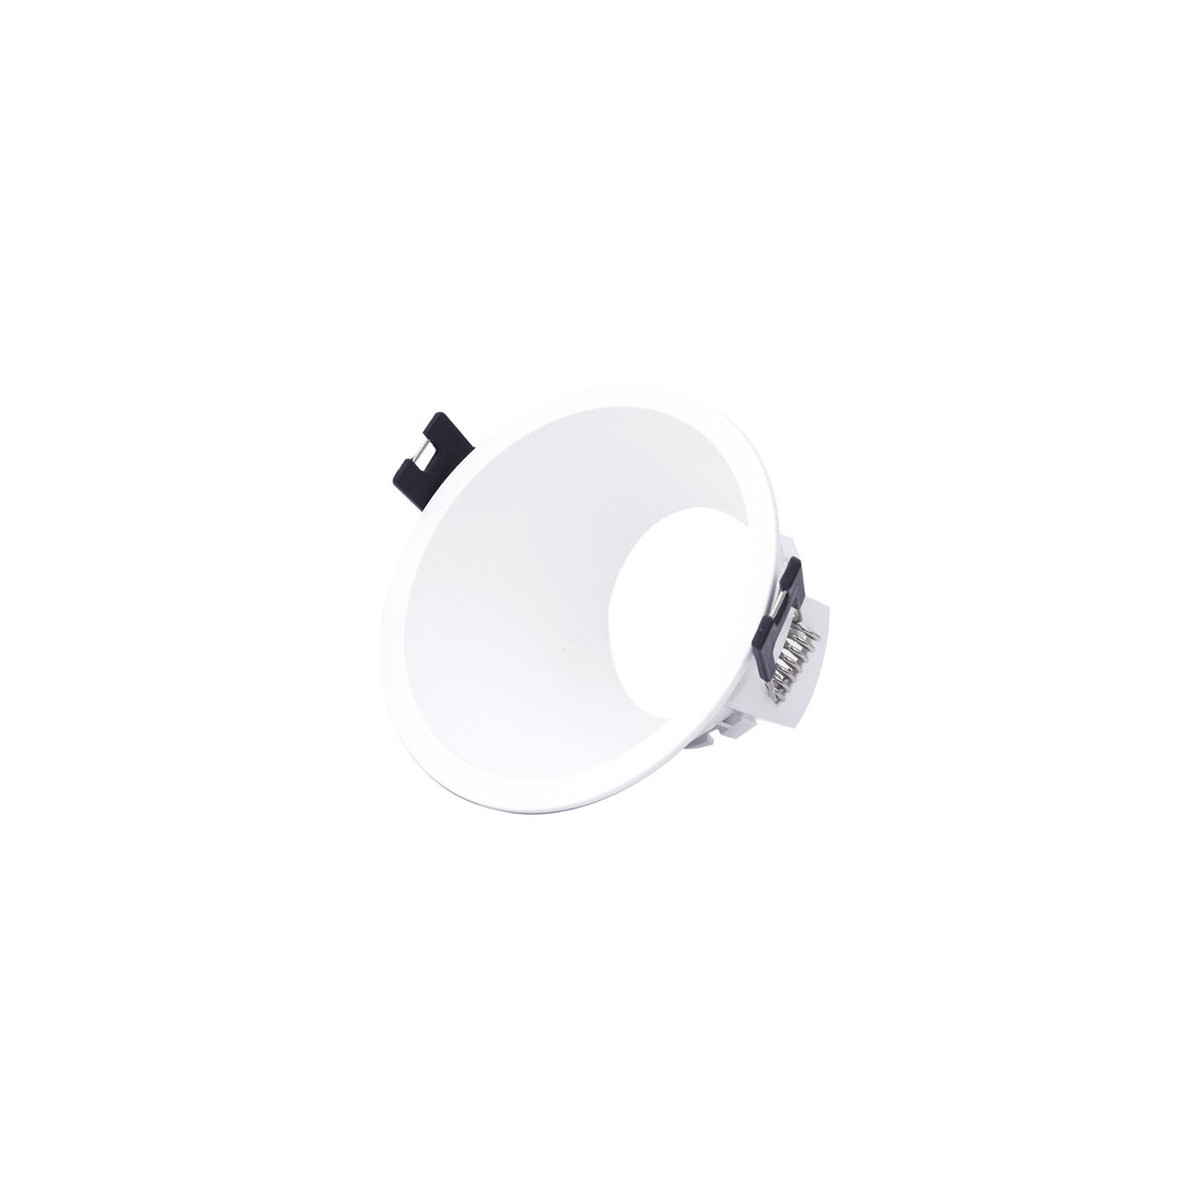 Oval flush base for dichroic bulb PC series